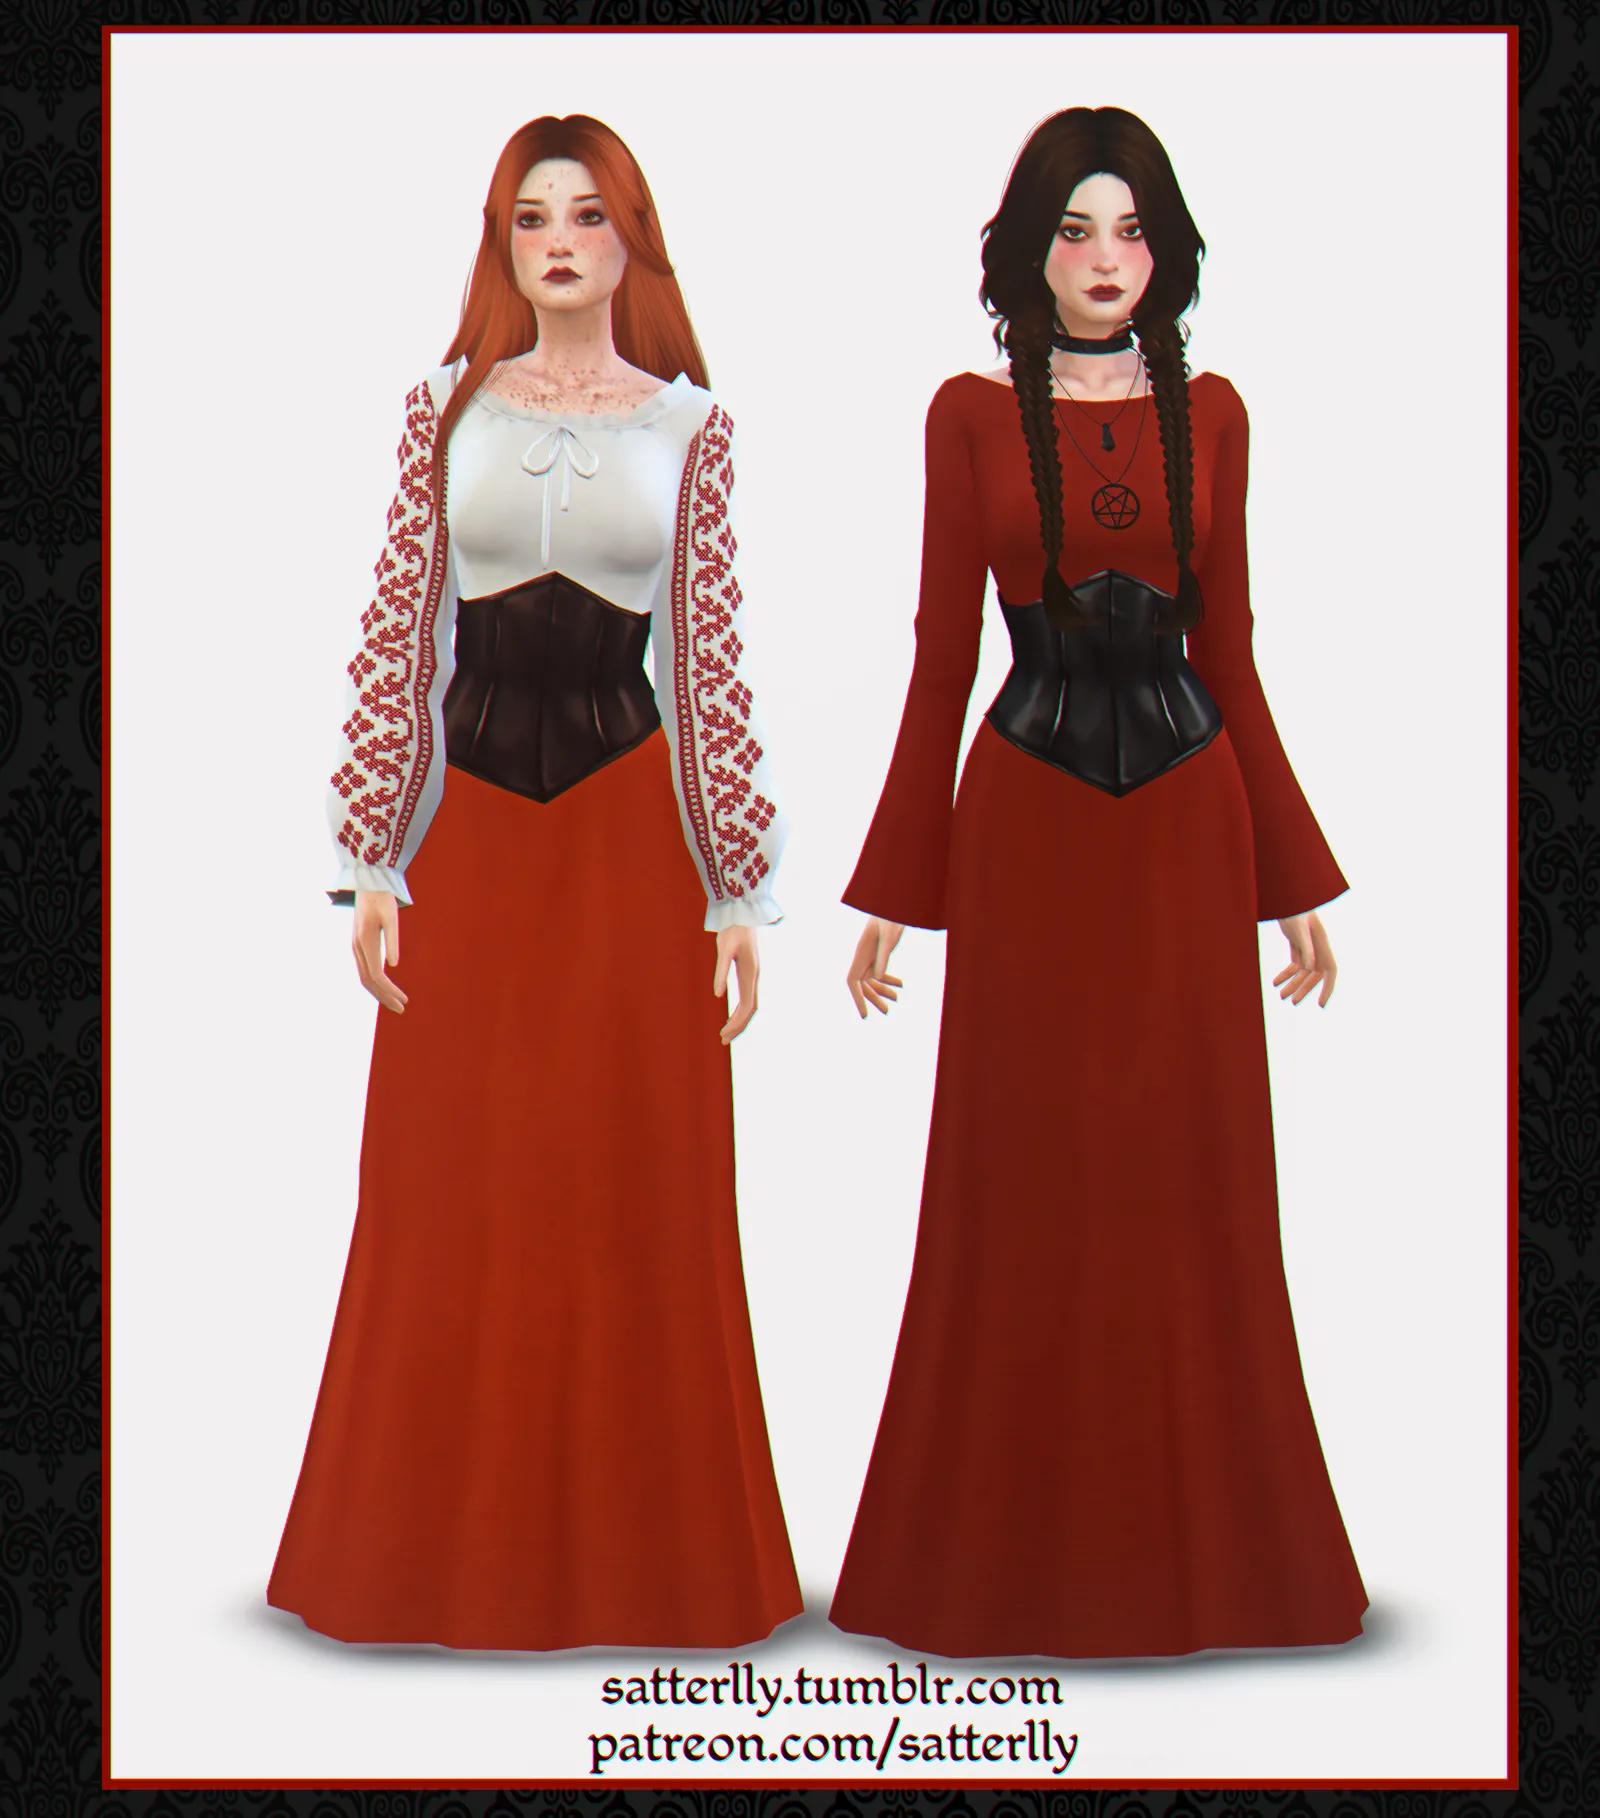 Medieval dress - Elissa